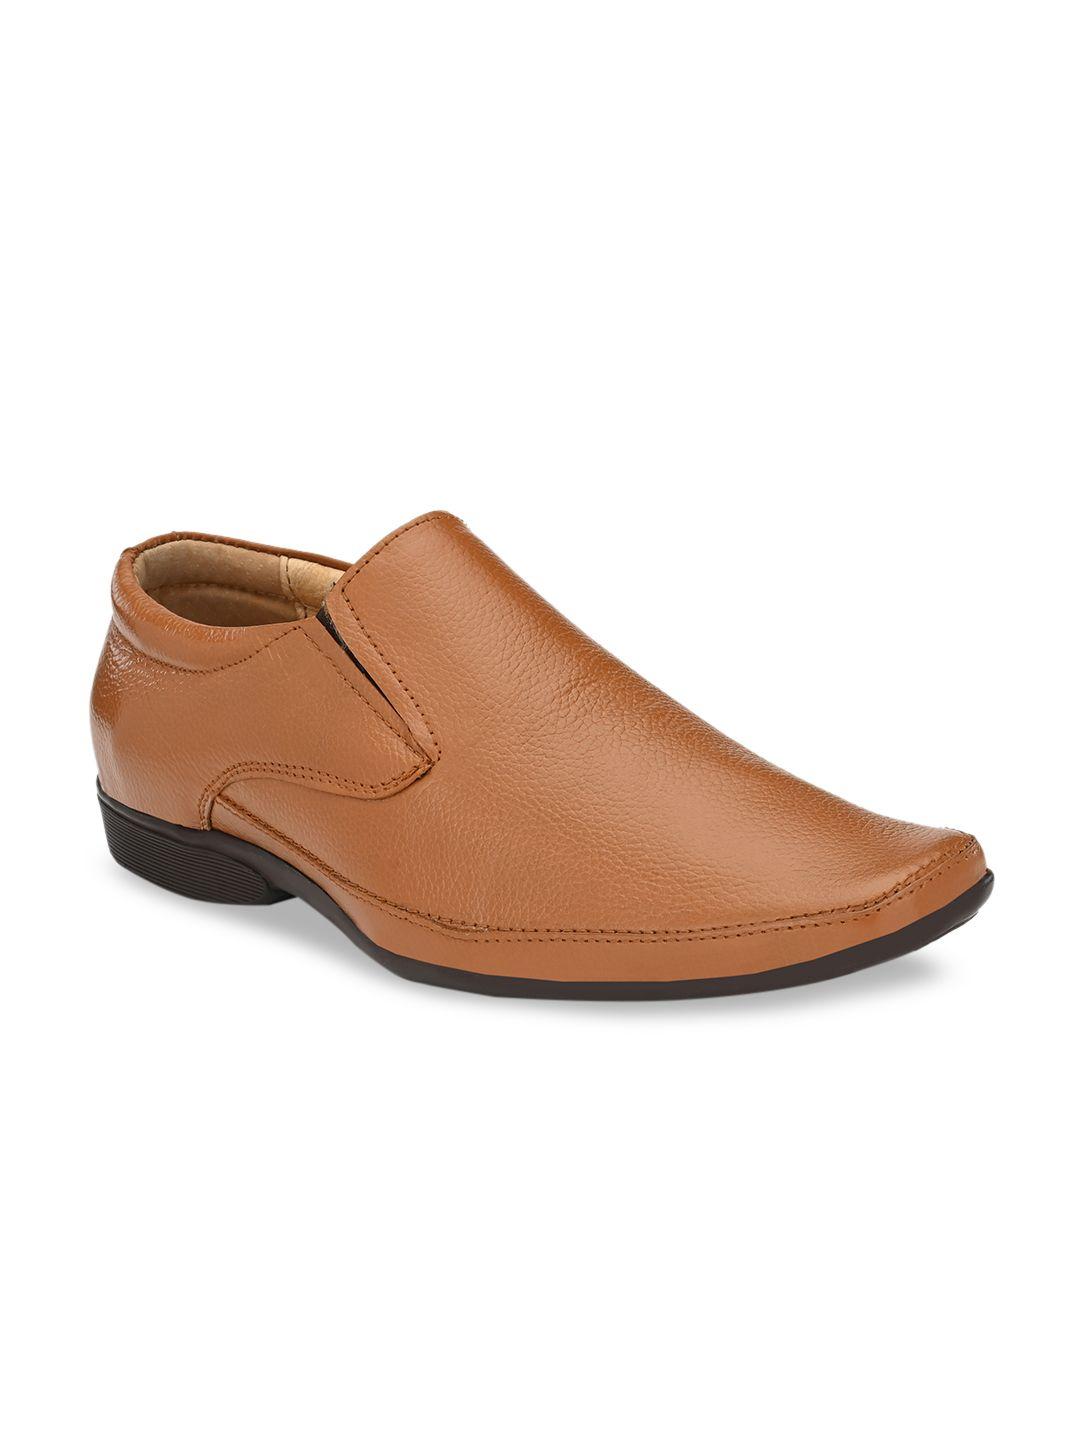 hirels men tan brown solid leather formal slip-ons